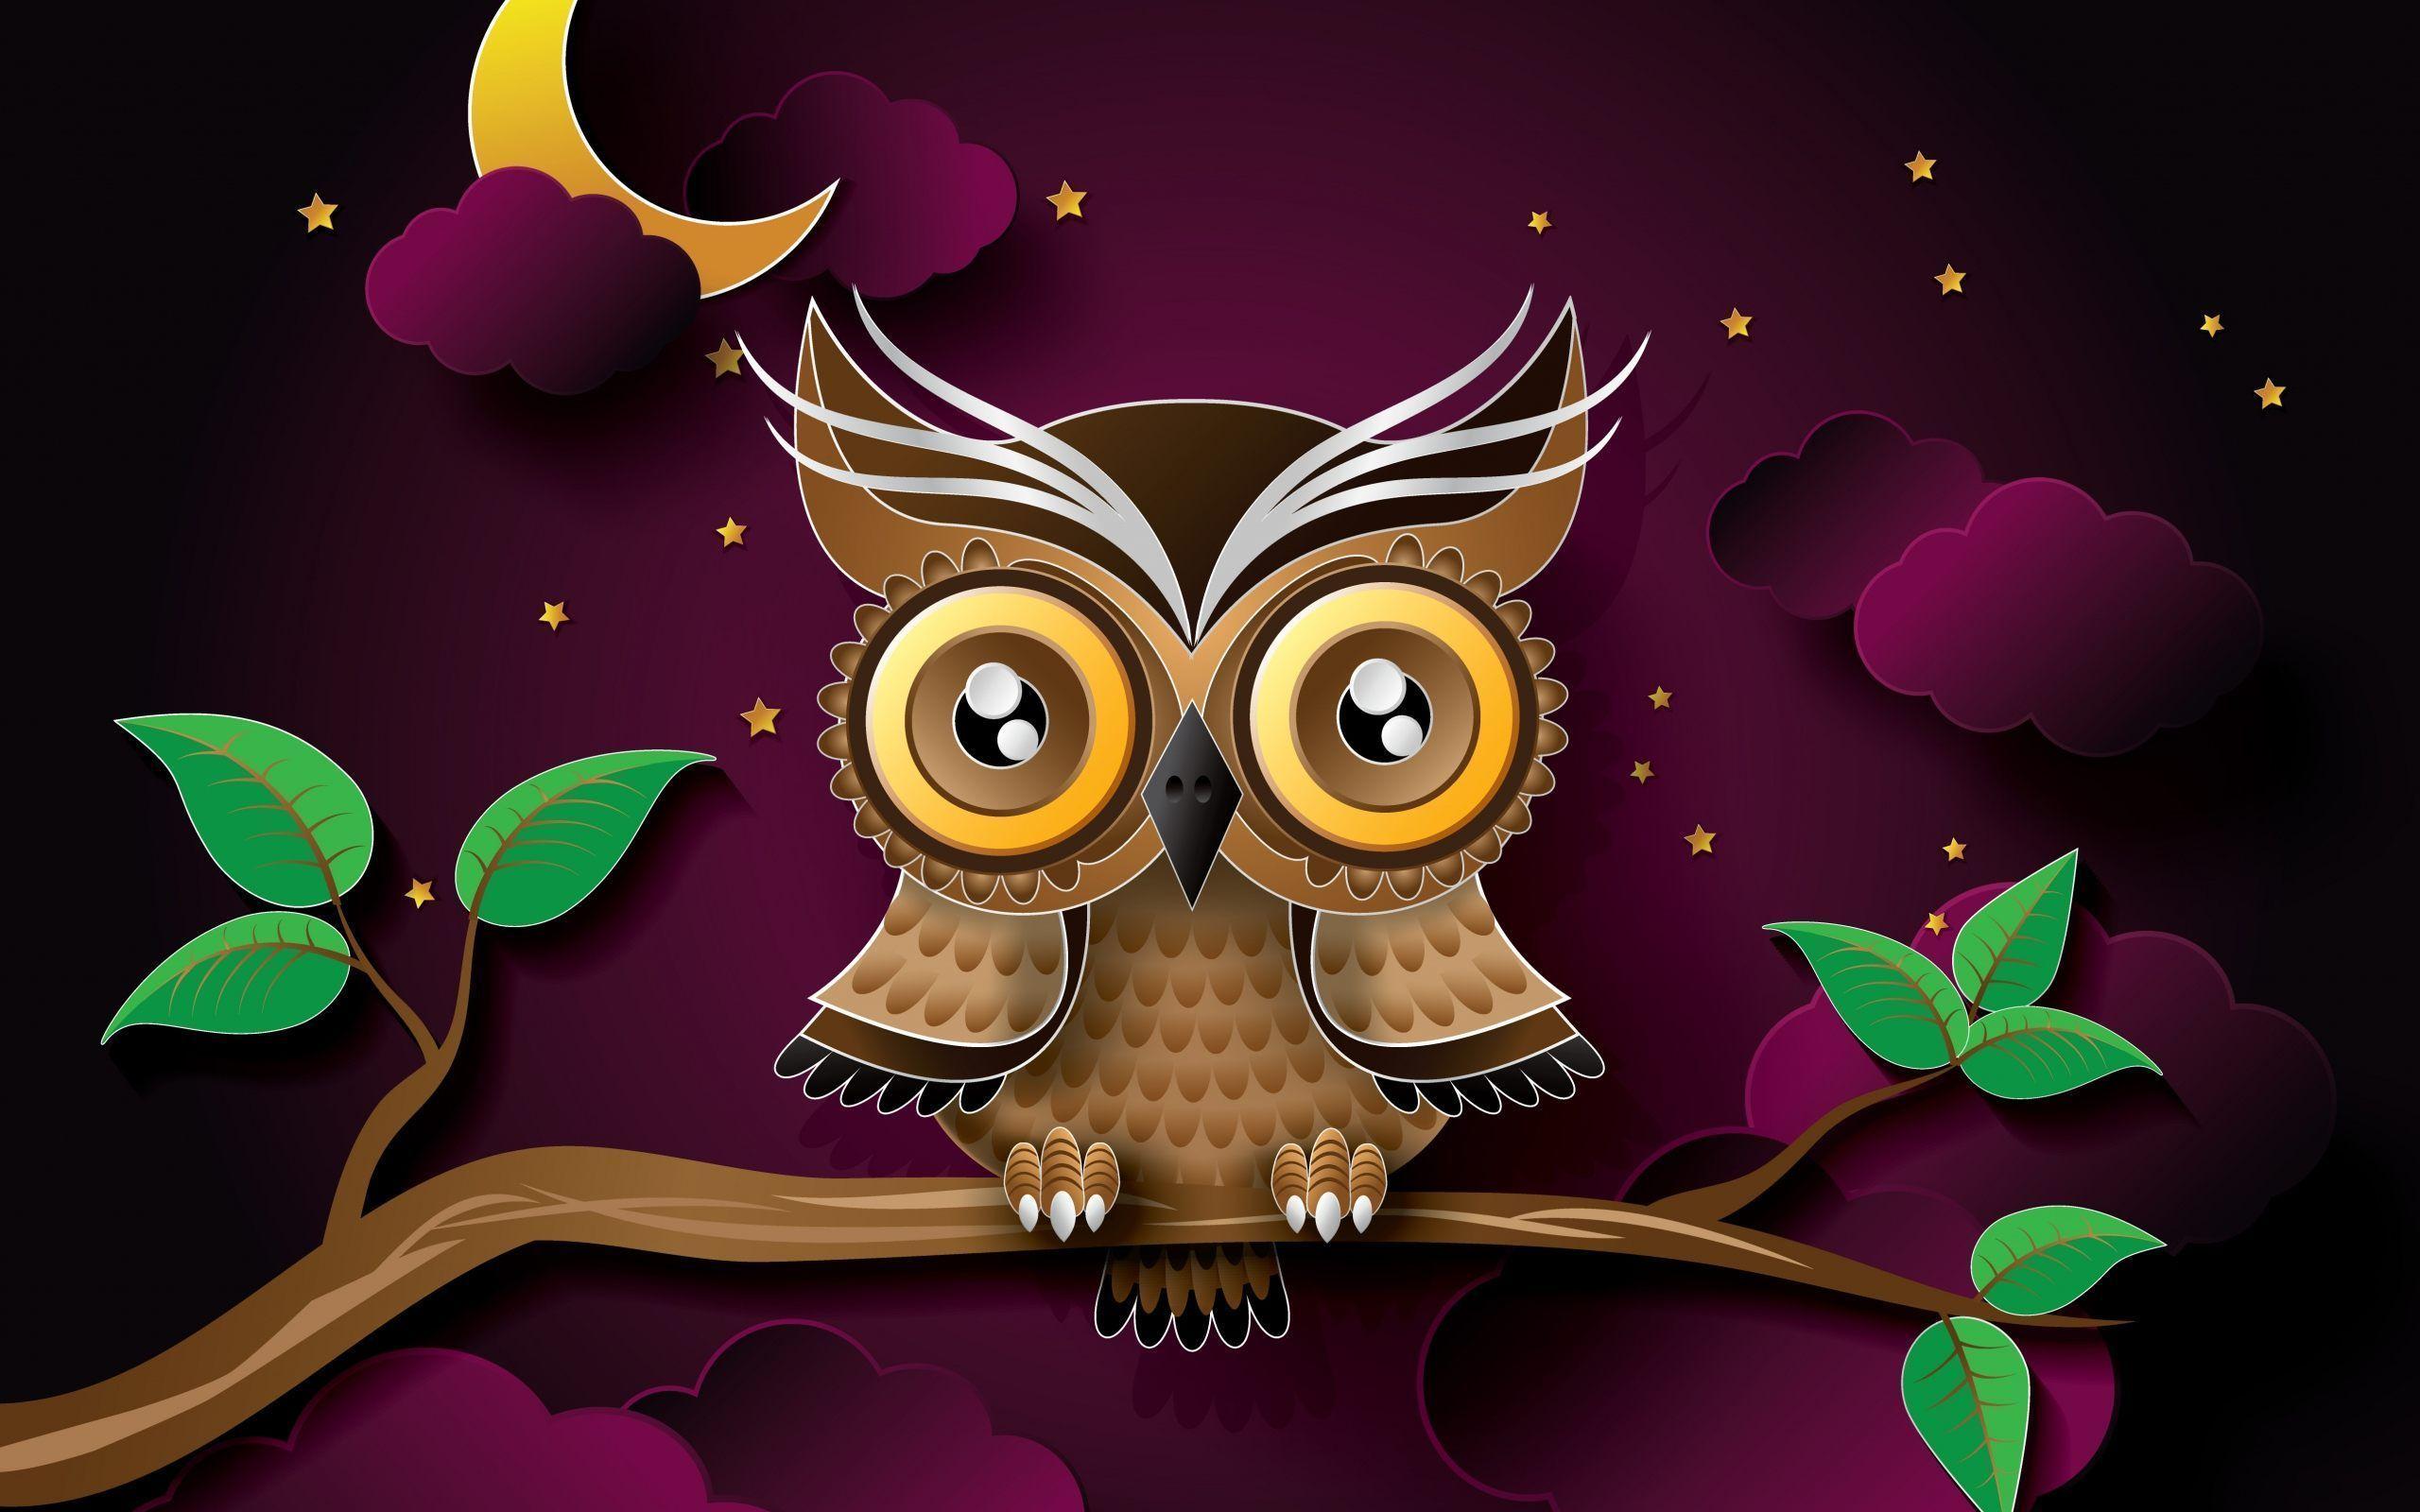 Owl Vector Art Wallpaper HD Download For Desktop & Mobile. Download